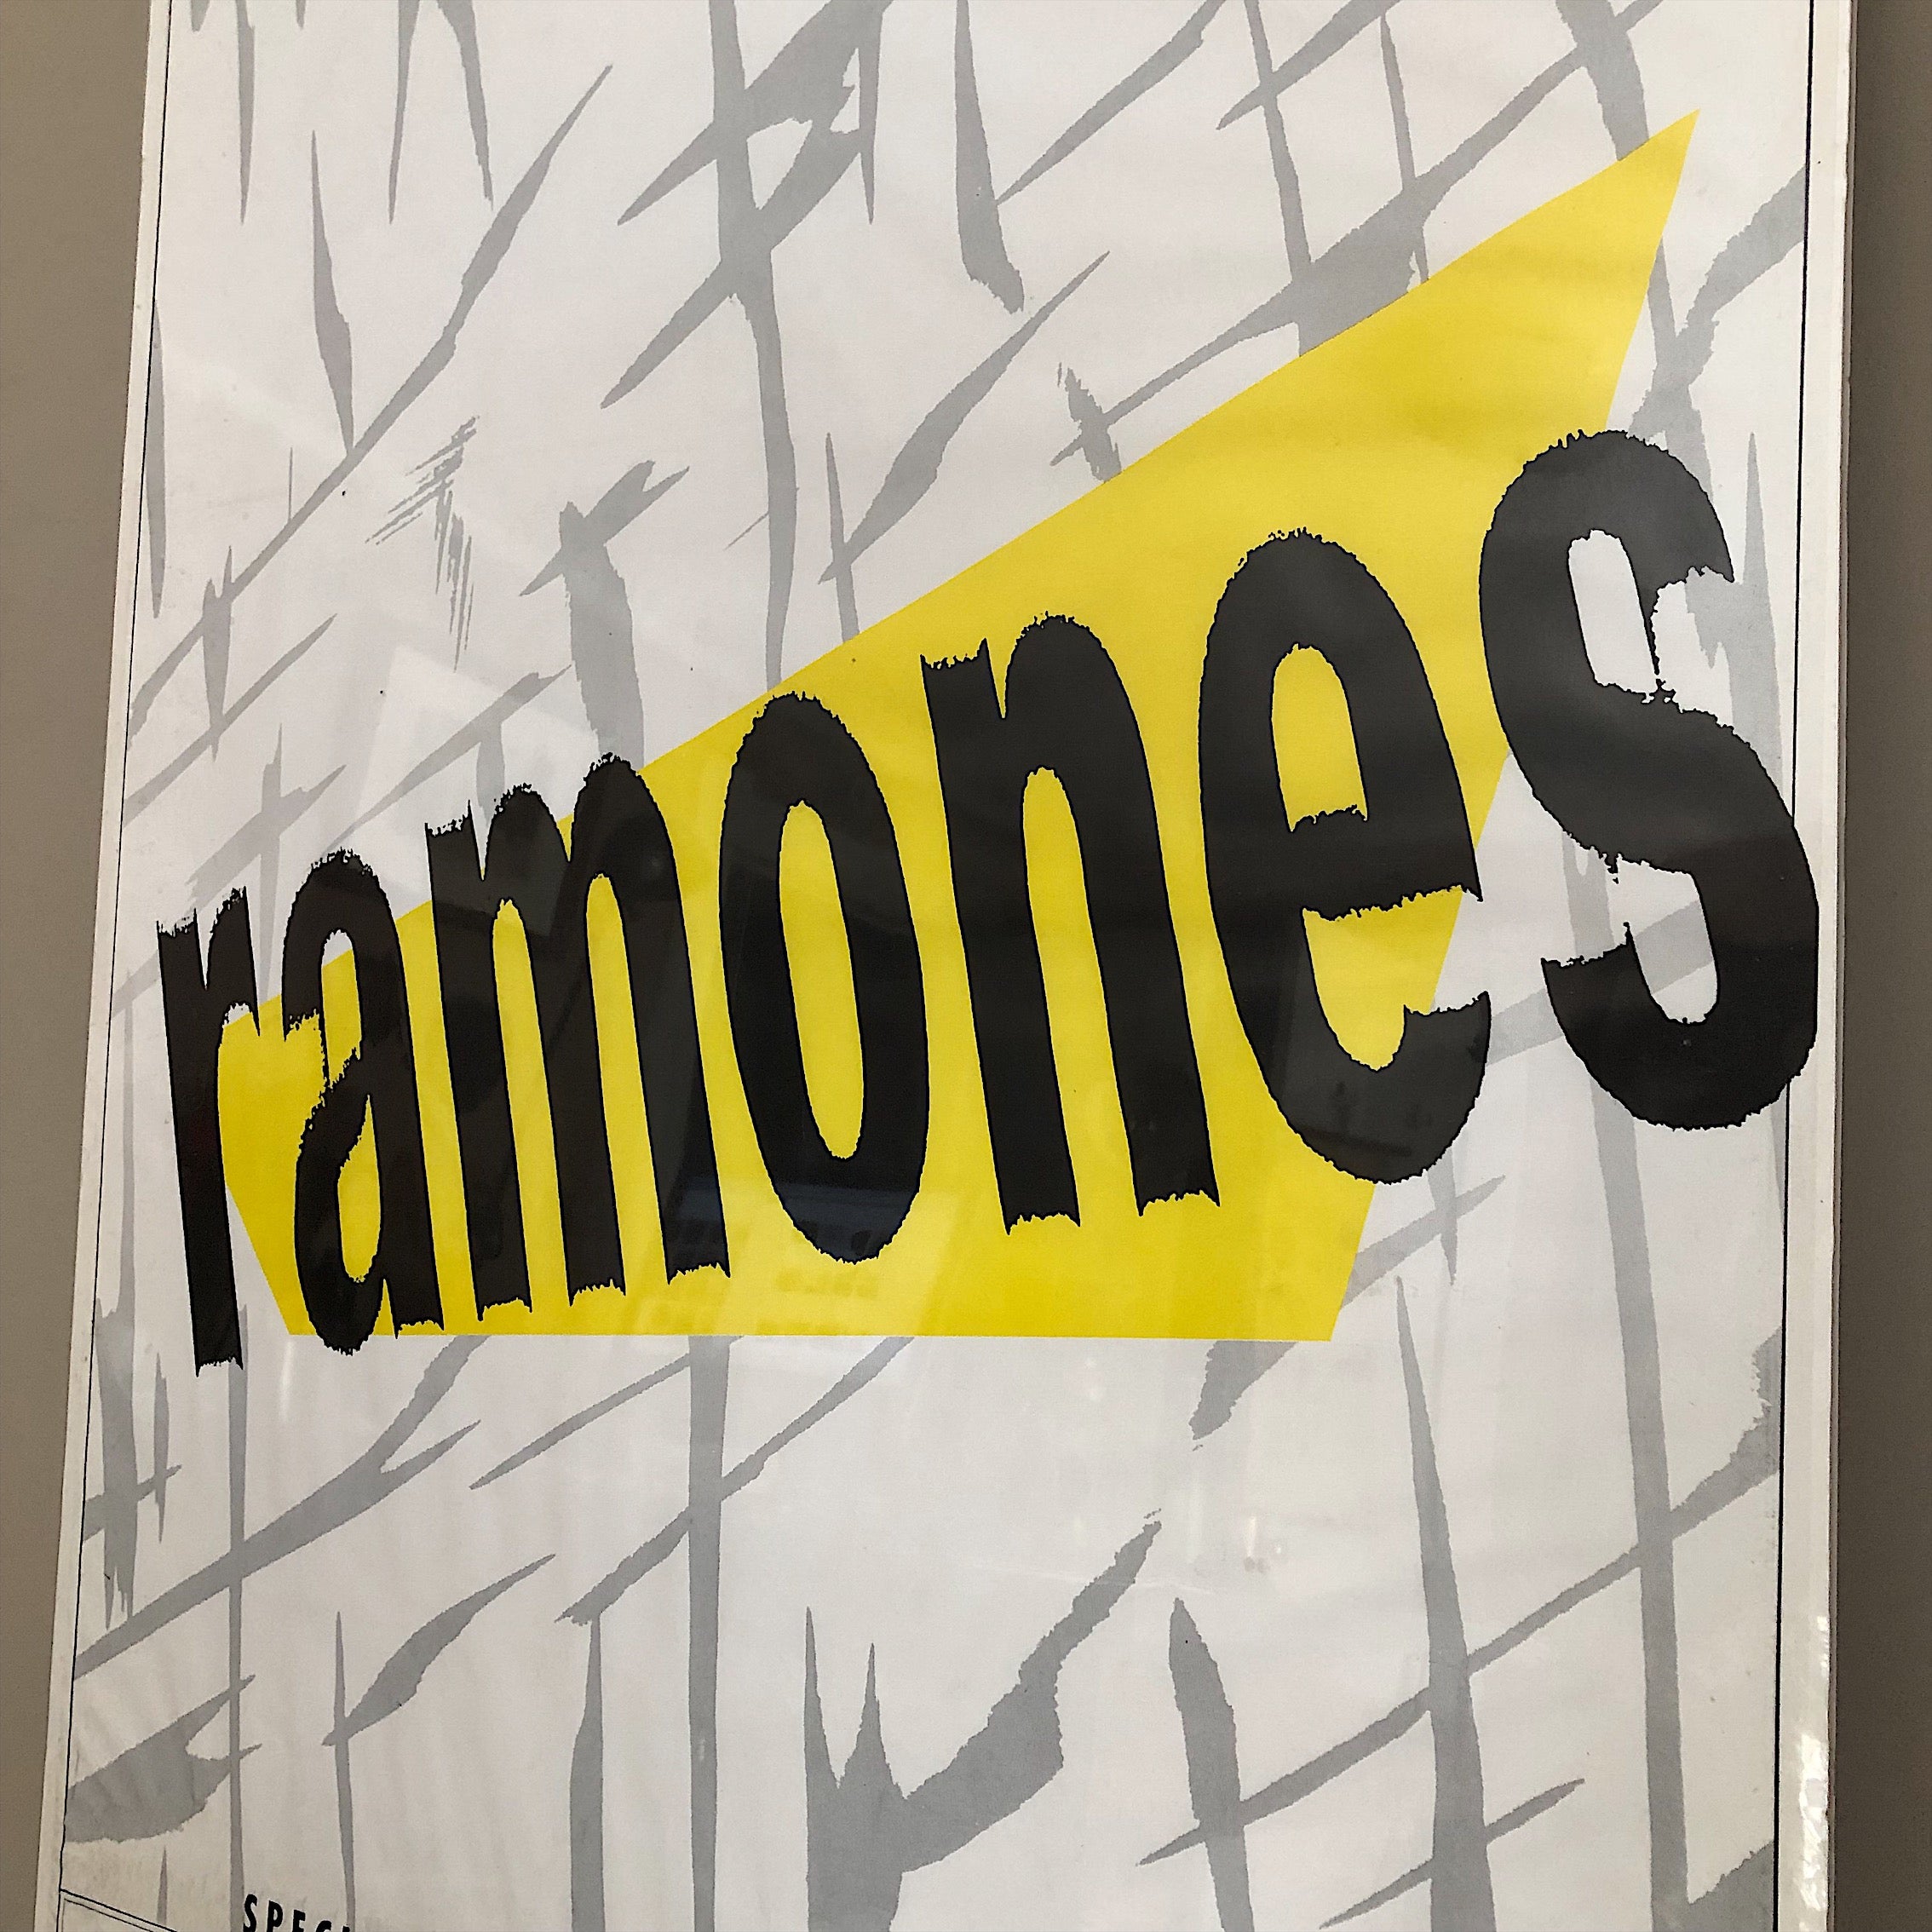 Rare Ramones Concert Poster from Munich Germany 1987 - Punk Rock Memorabilia - Rock Posters 